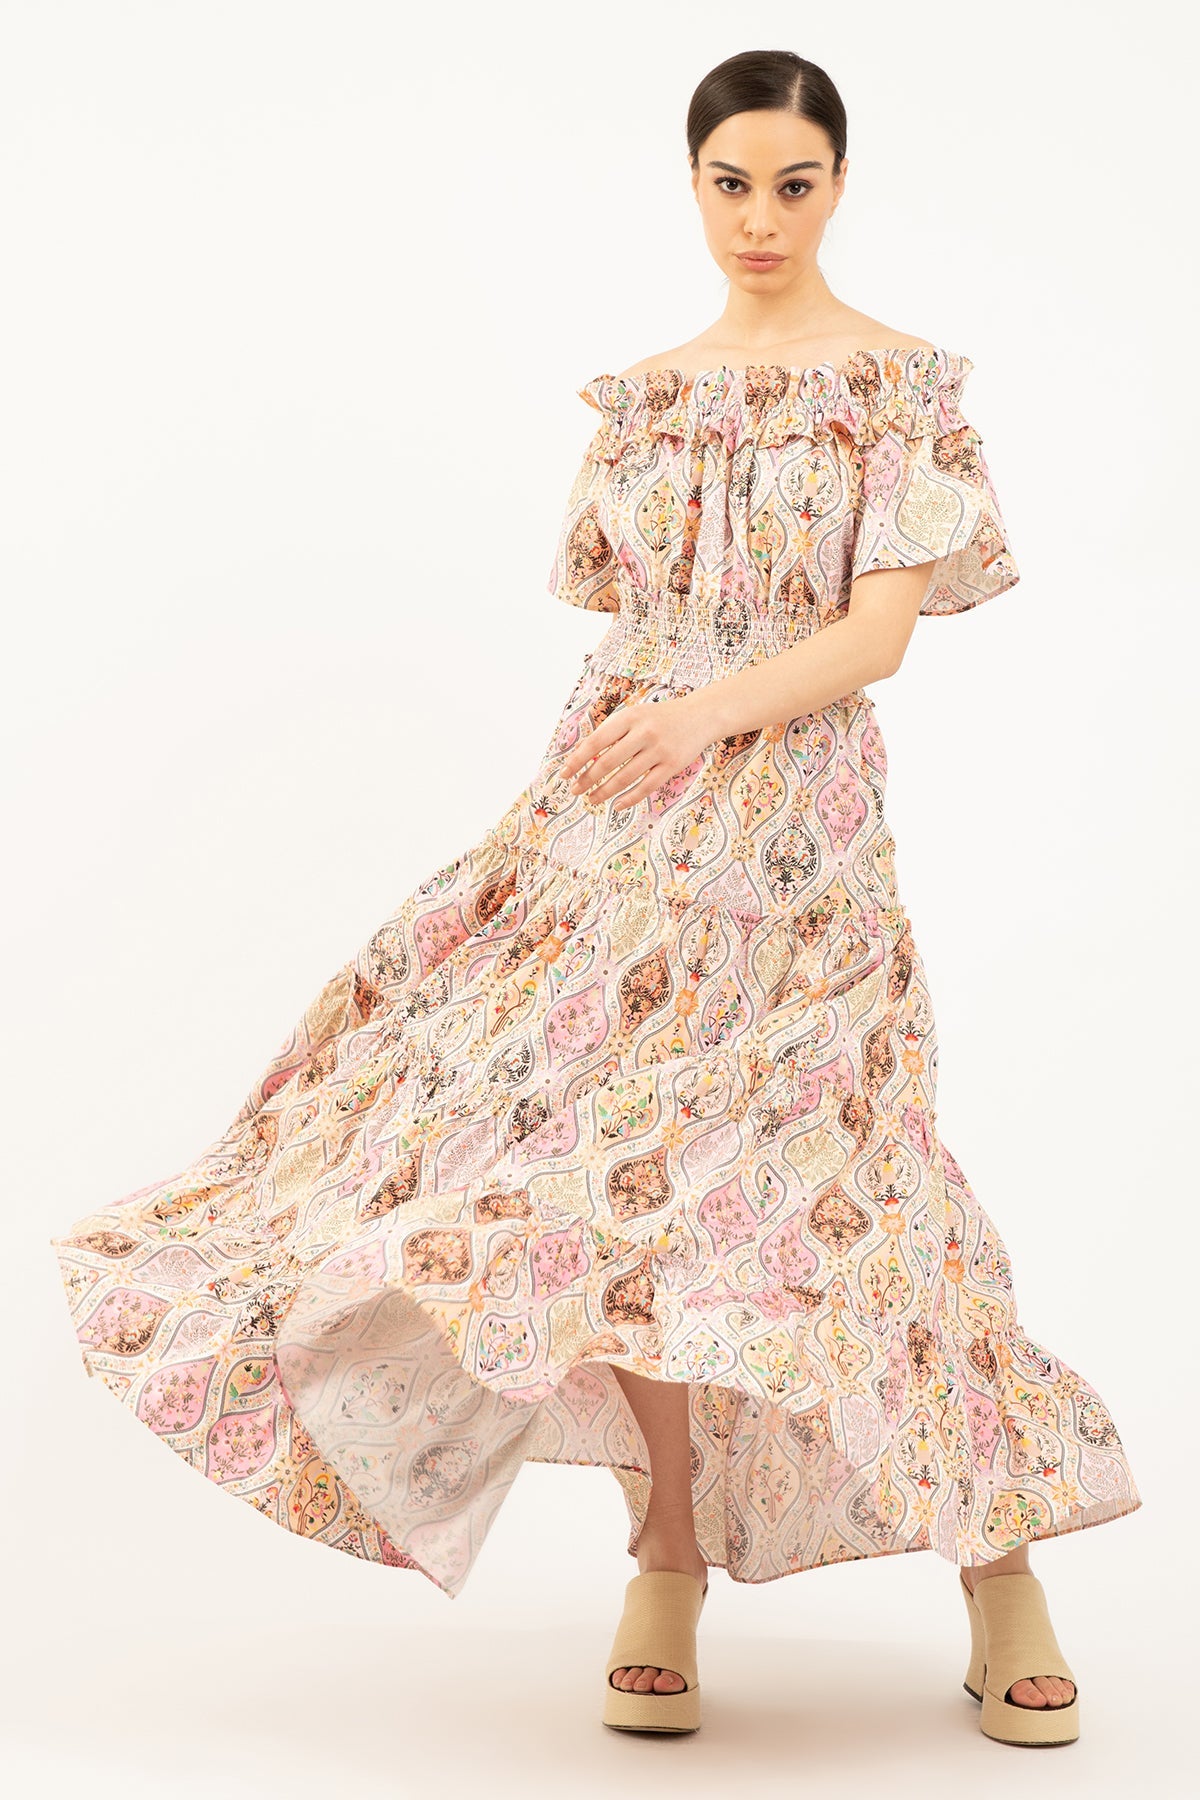 Sandy Dress - Premium Long Dresses from Marina St Barth - Just $565! Shop now at Marina St Barth